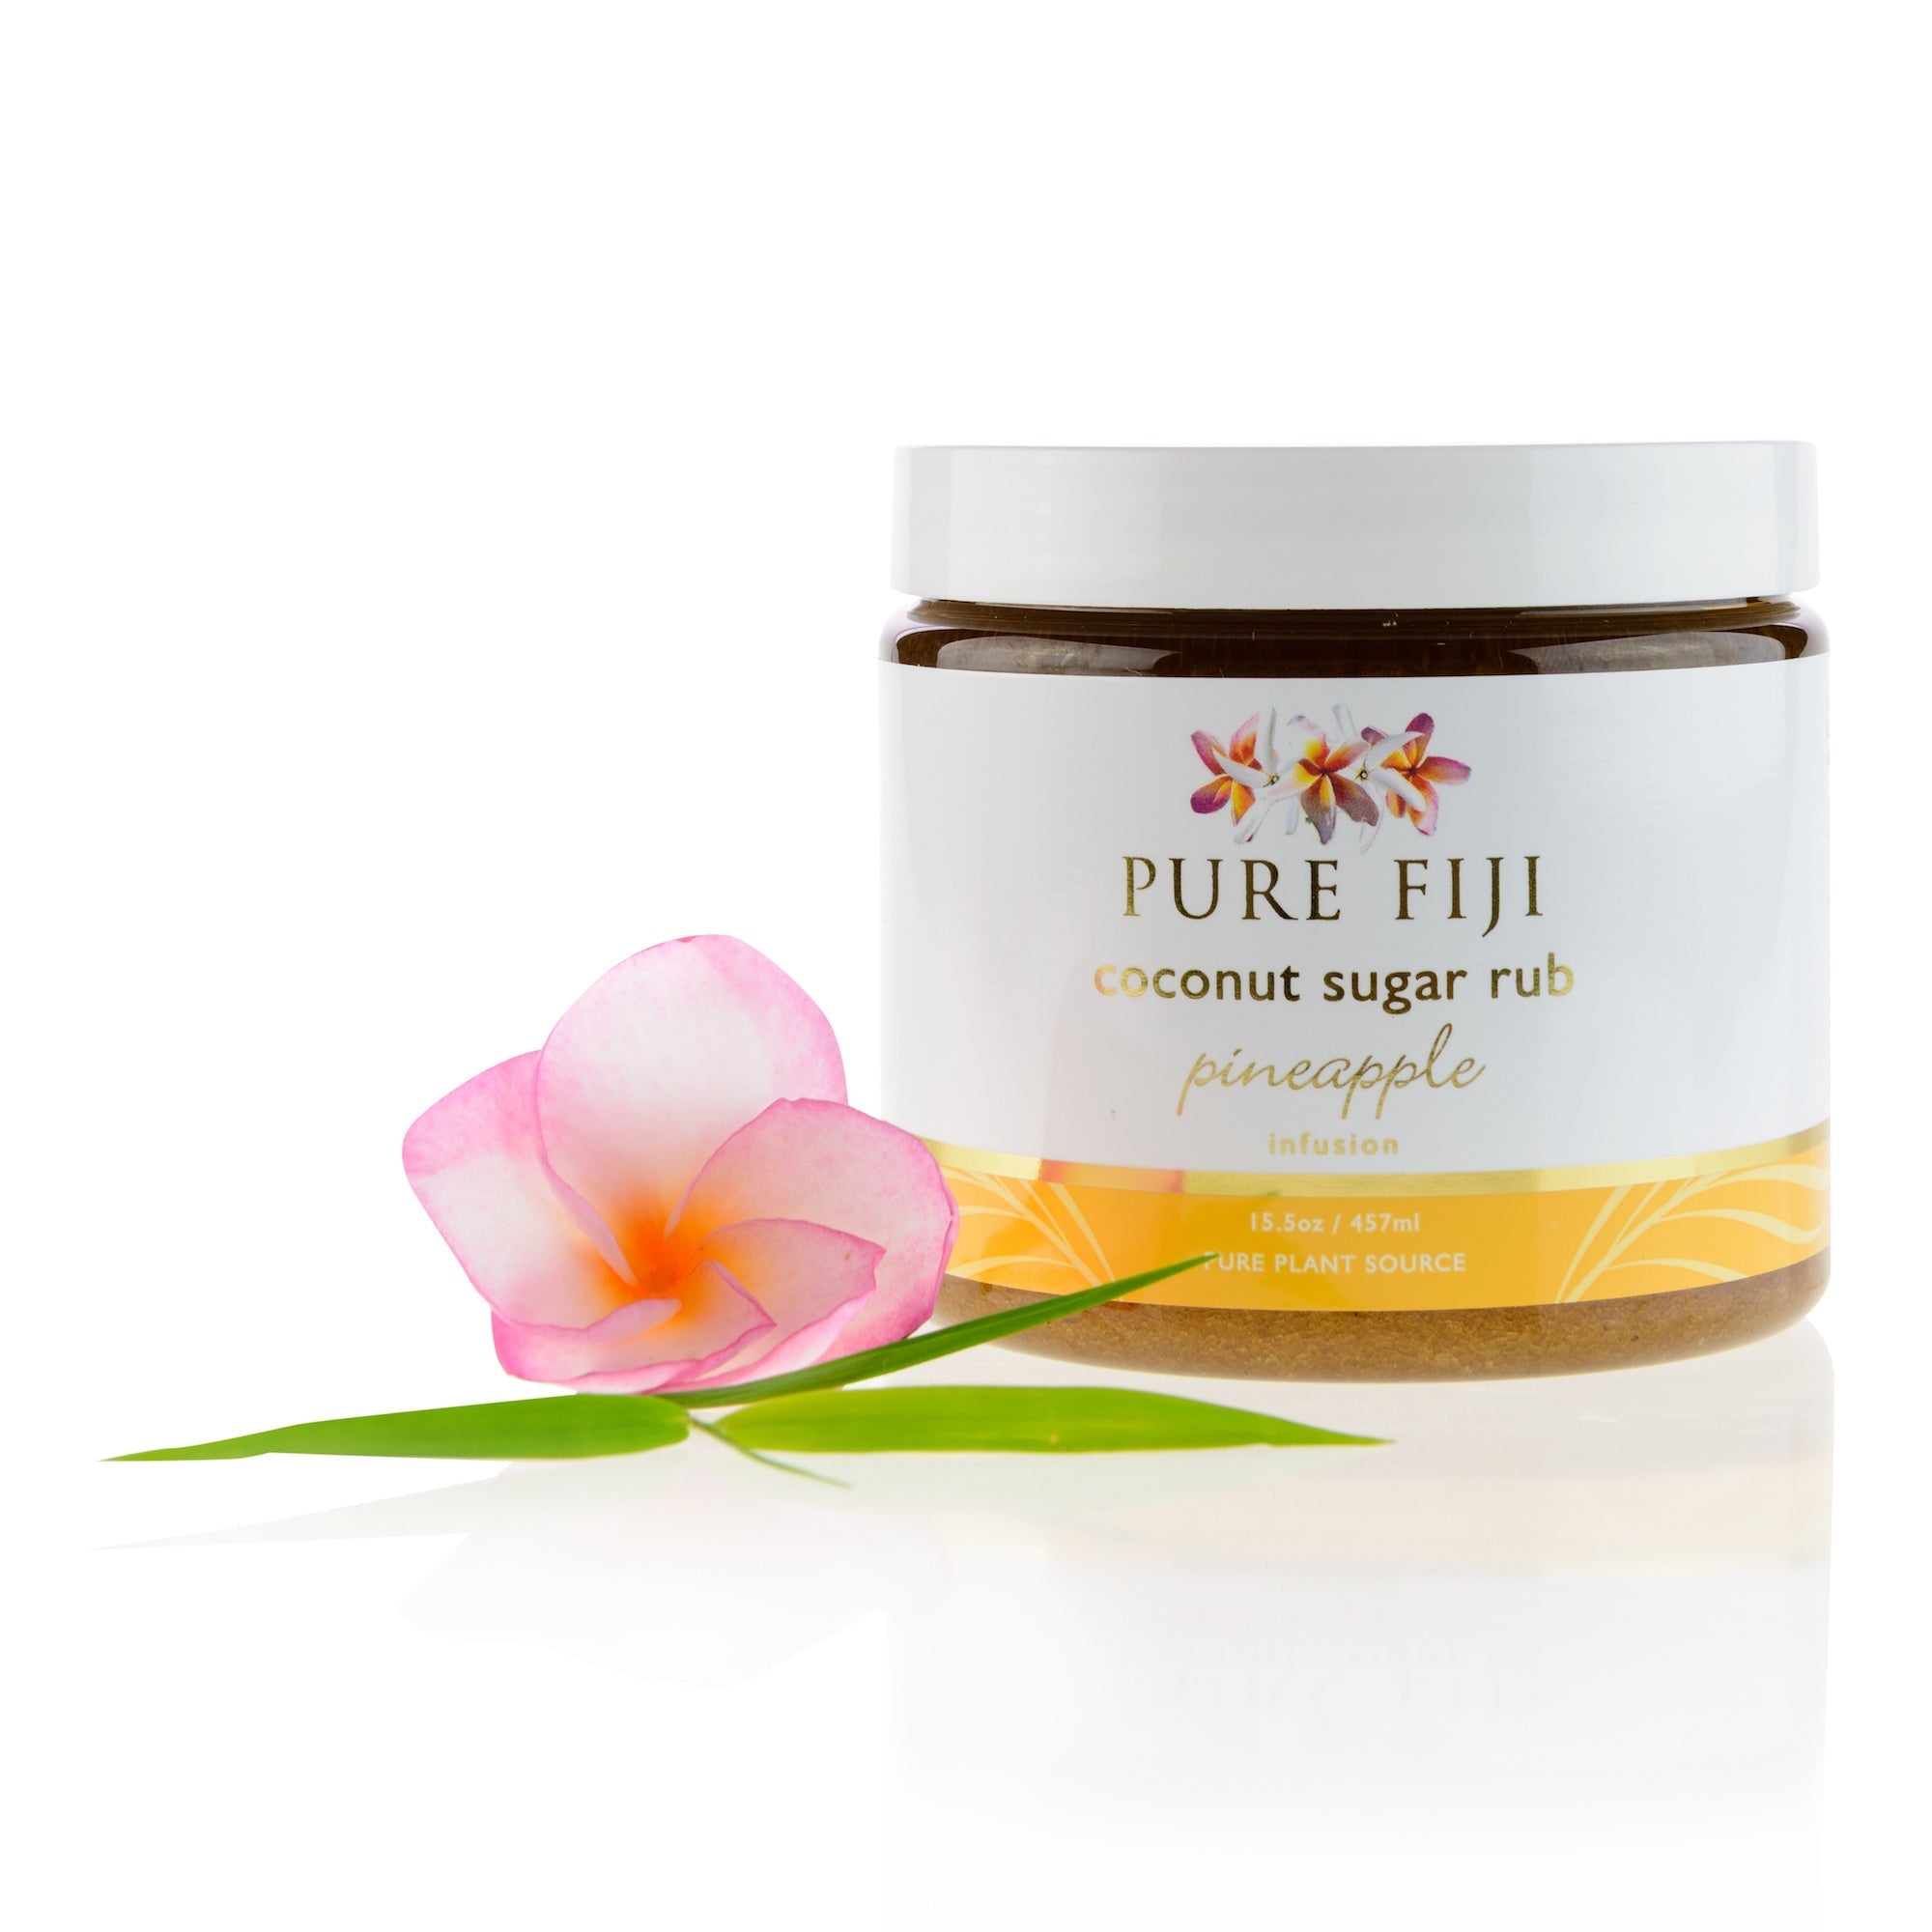 Pure Fiji Coconut Sugar Rub / Pineapple / Swatch